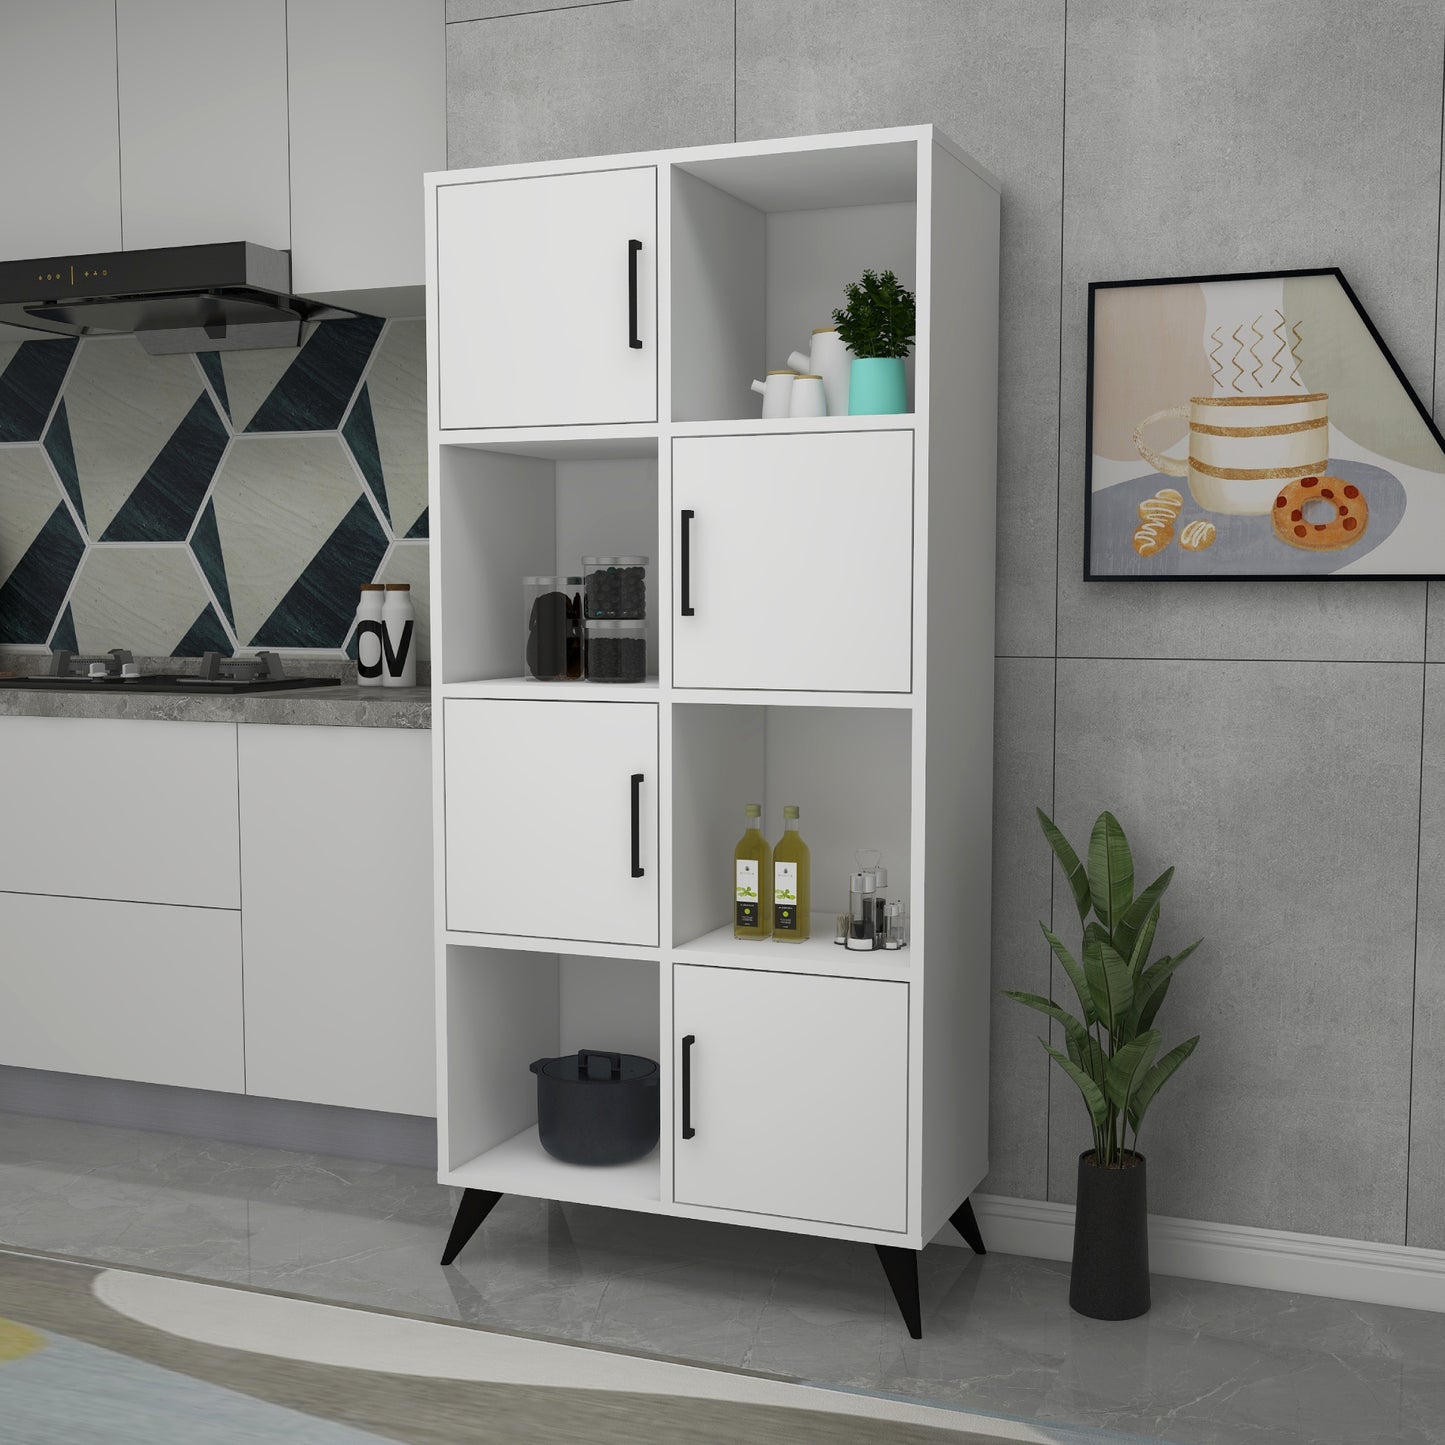 Nyx Multi-Purpose Cabinet Shelf Cupboard